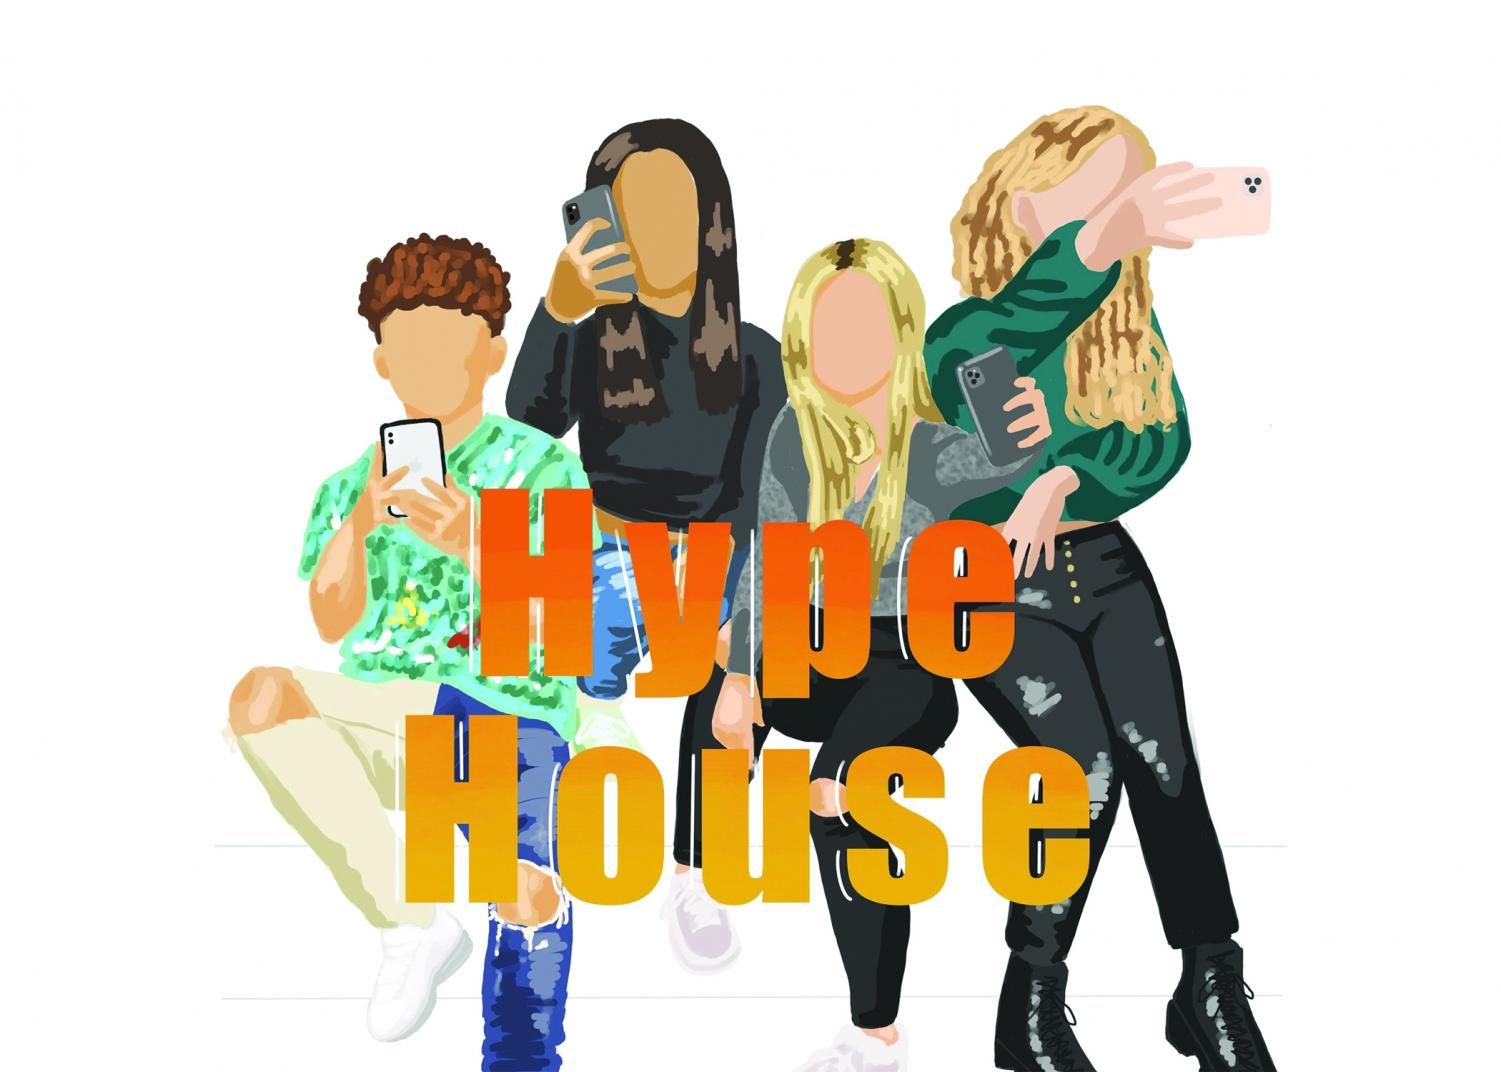 Mini Hype House Logo Wallpapers